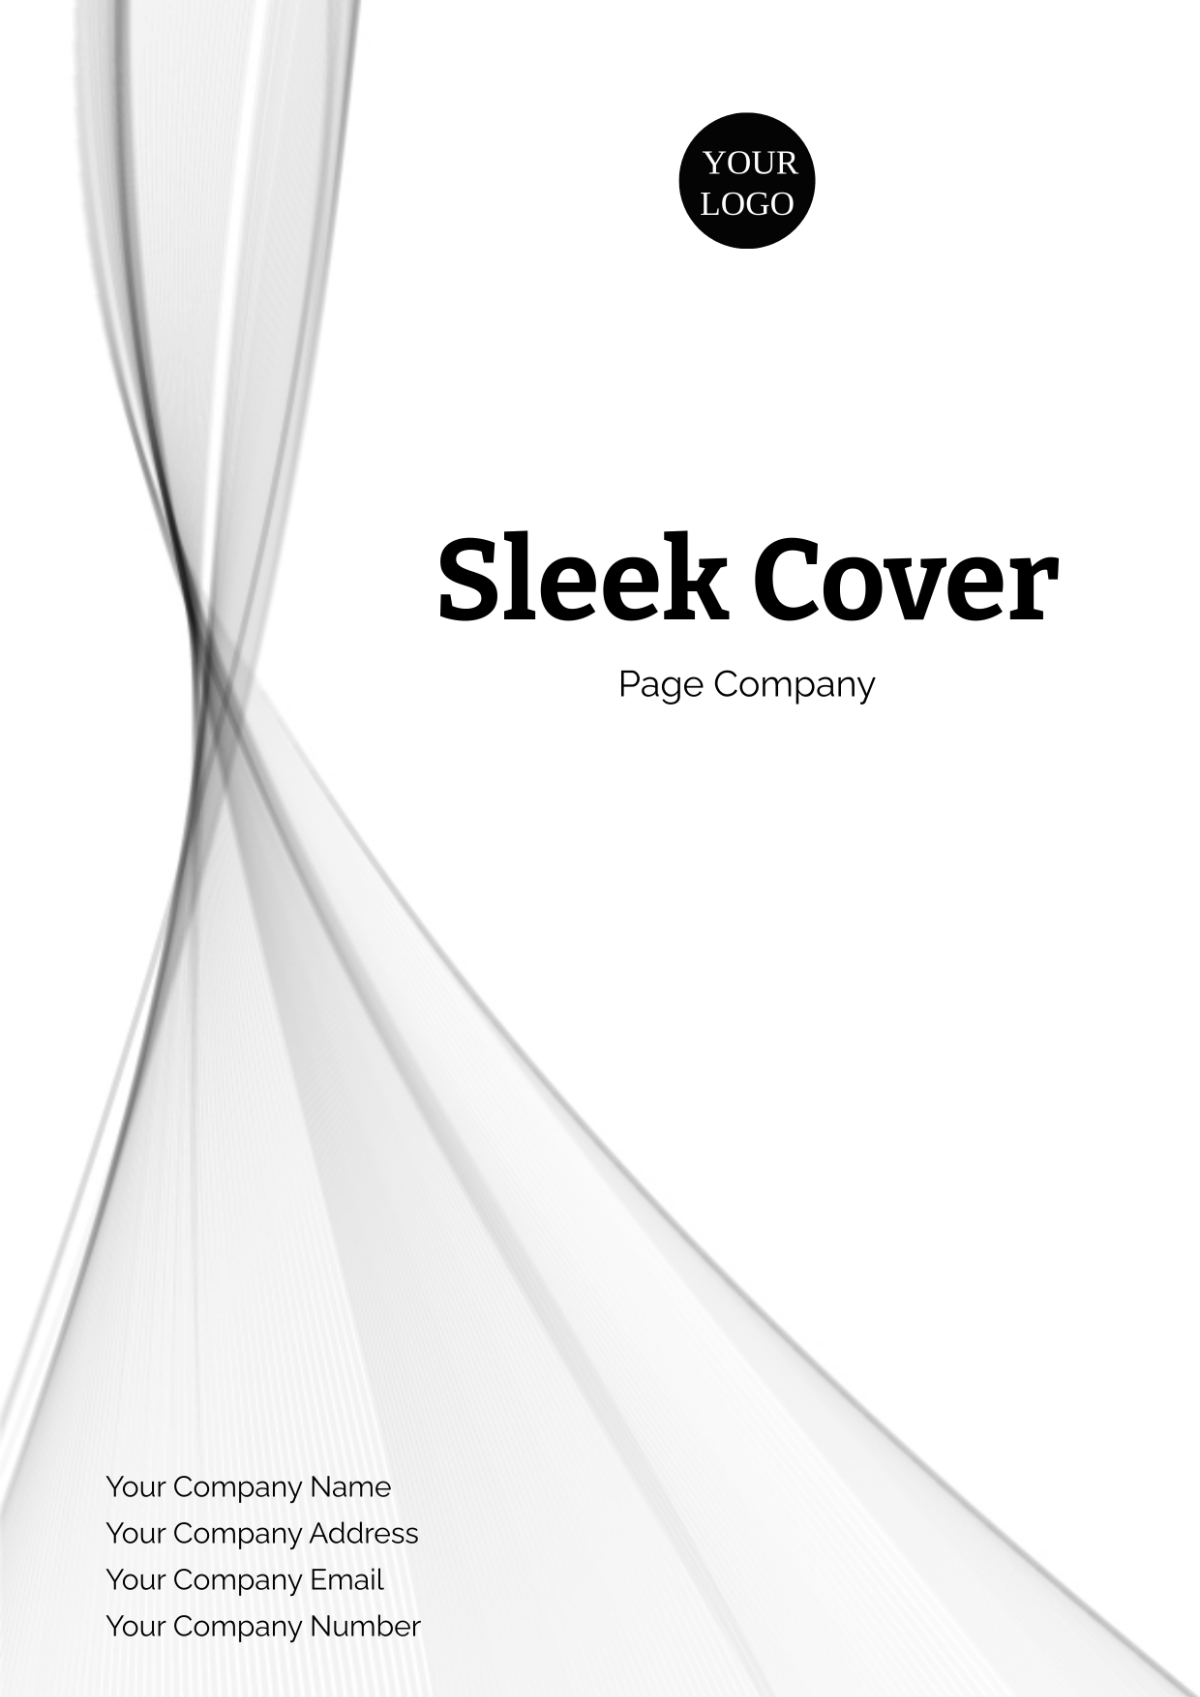 Sleek Cover Page Company